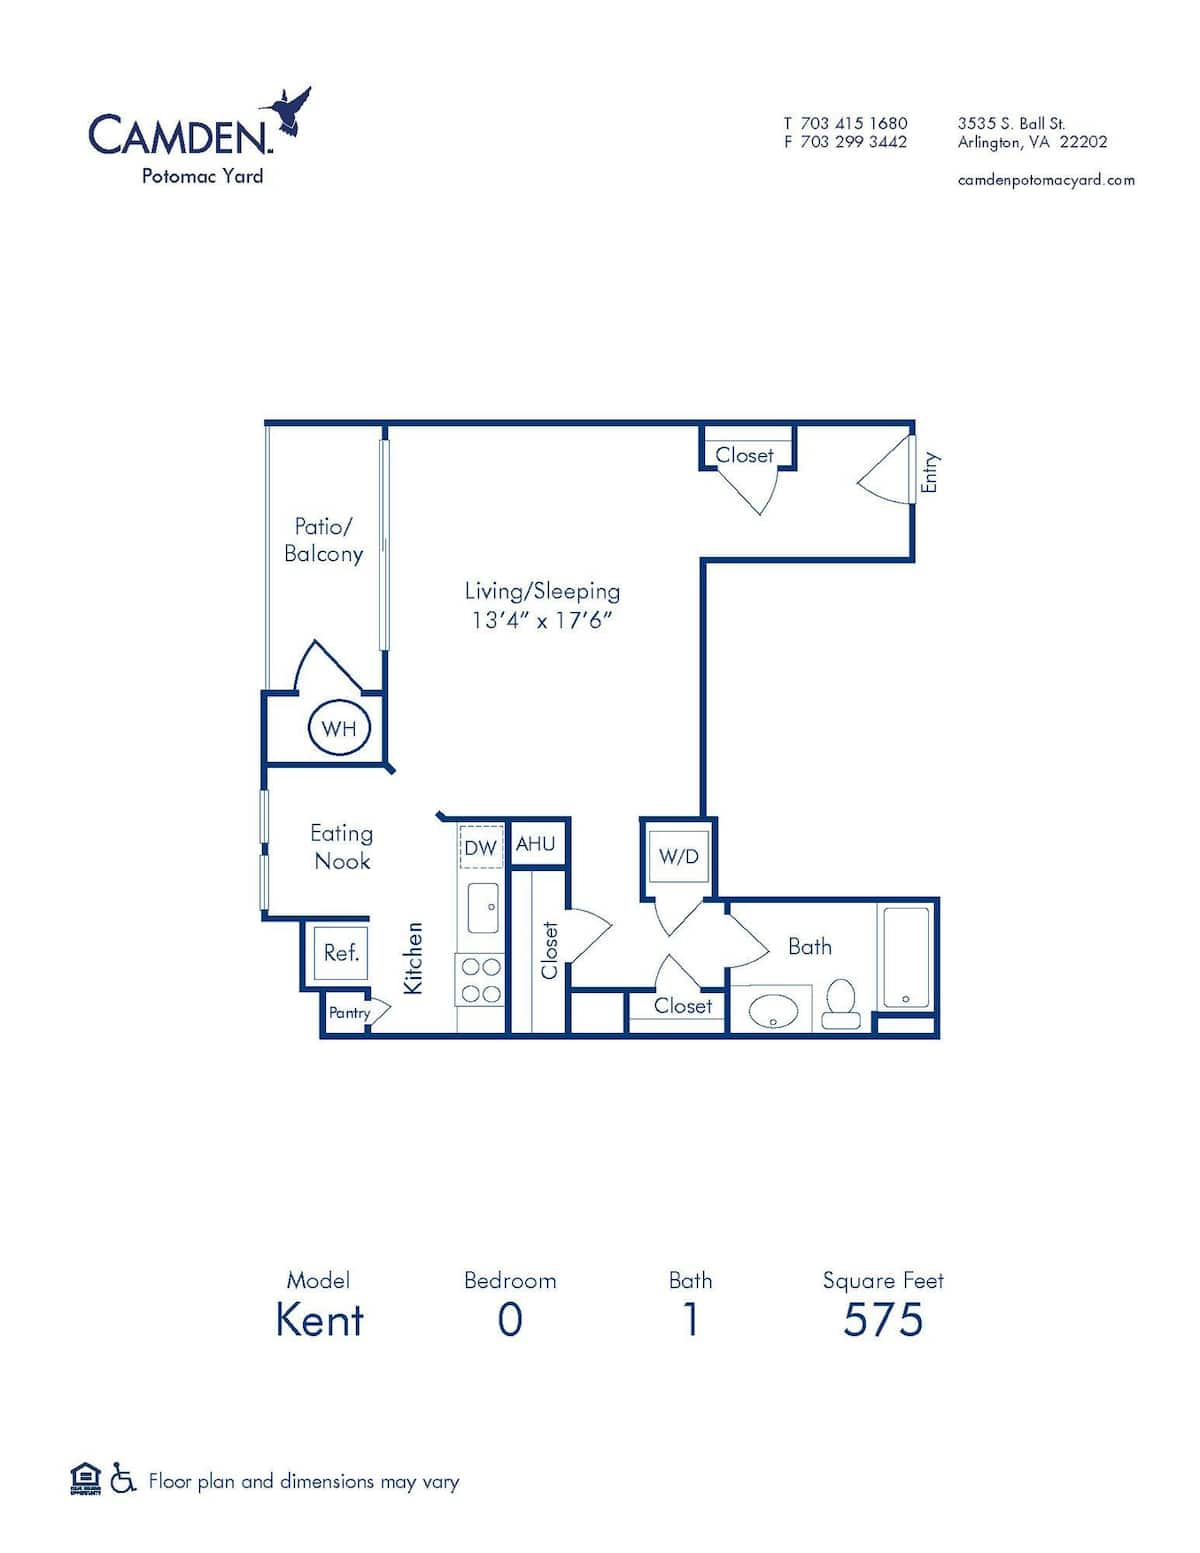 Floorplan diagram for Kent, showing Studio